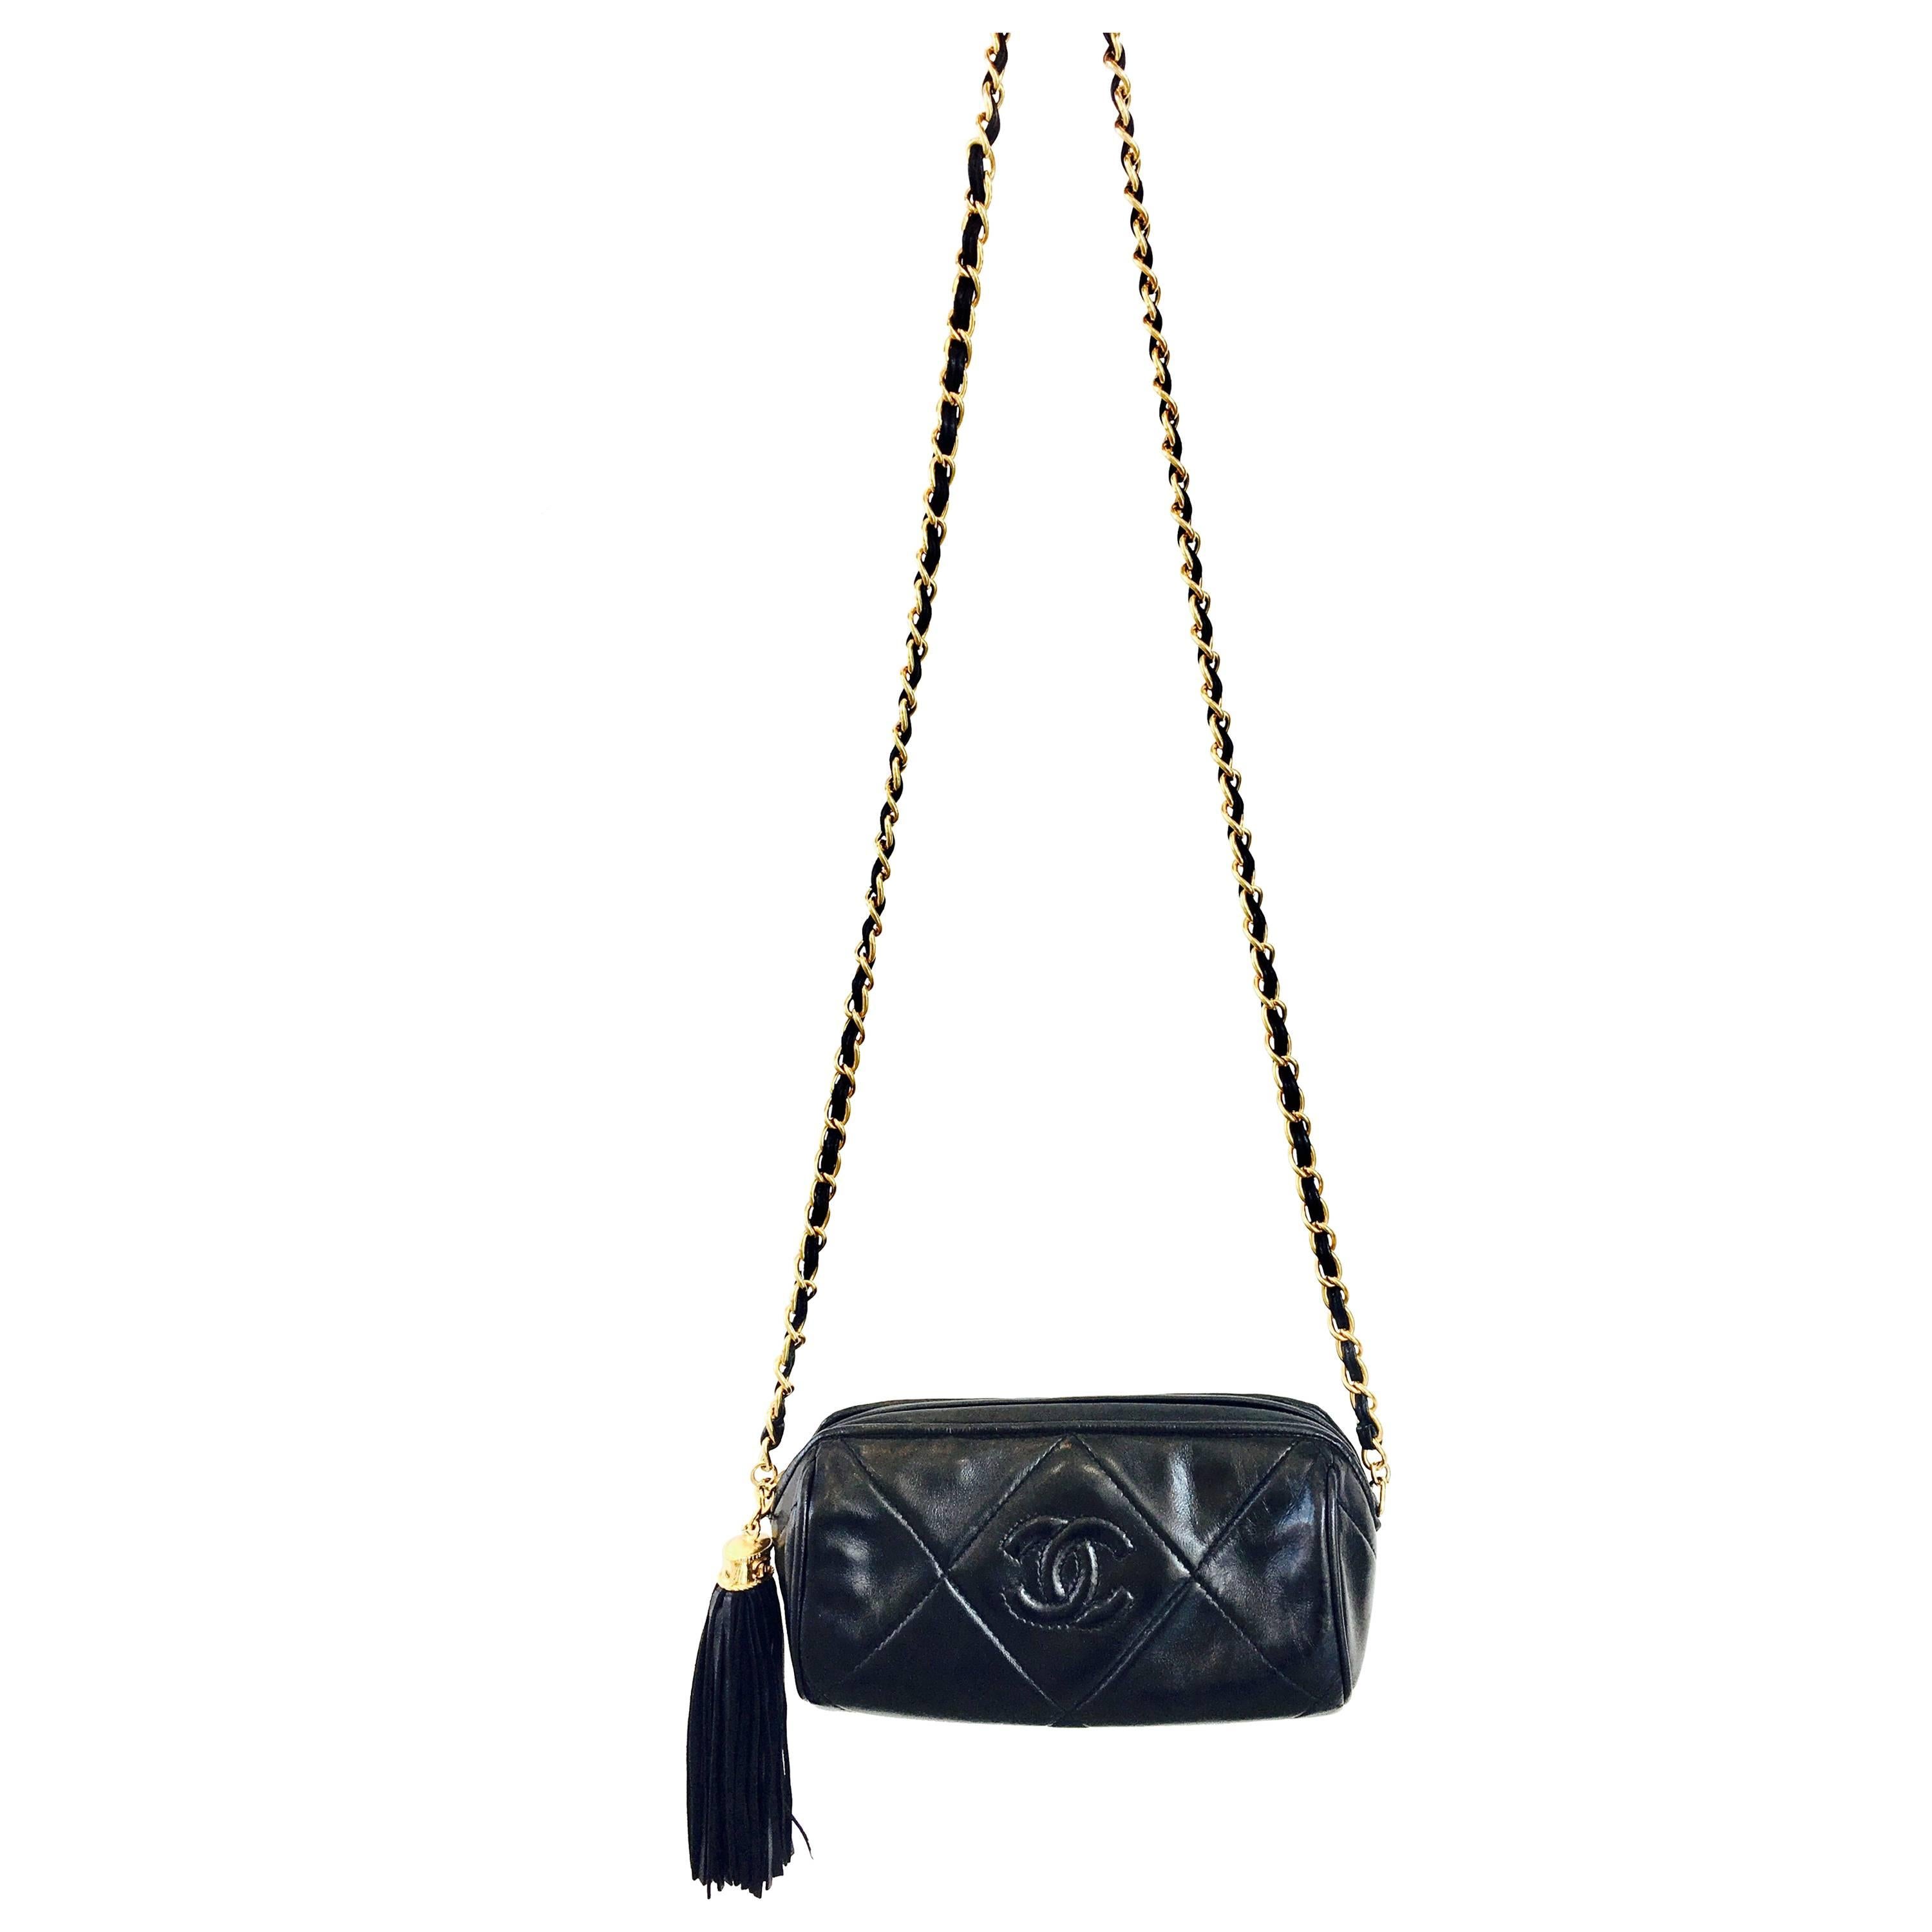 1980's Chanel Bombolino Black Patent Leather Shouldbag